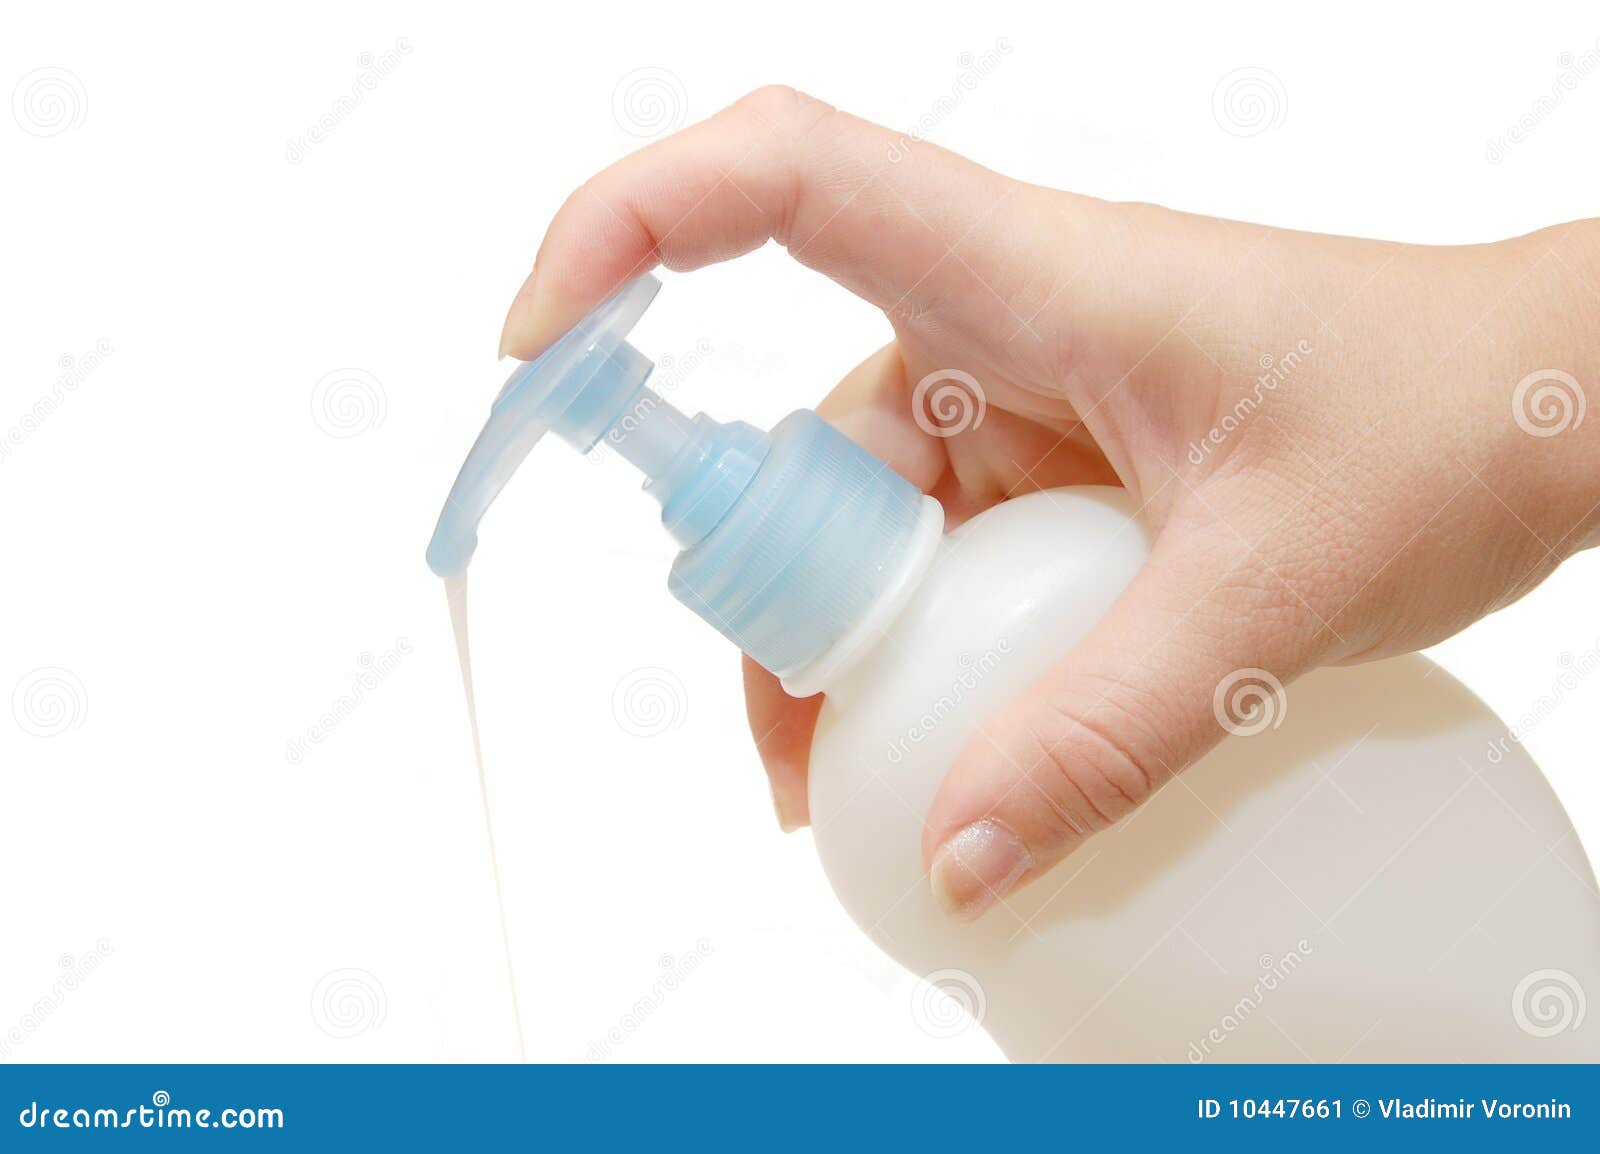 Objeto - botella de jabón líquido en mano femenina